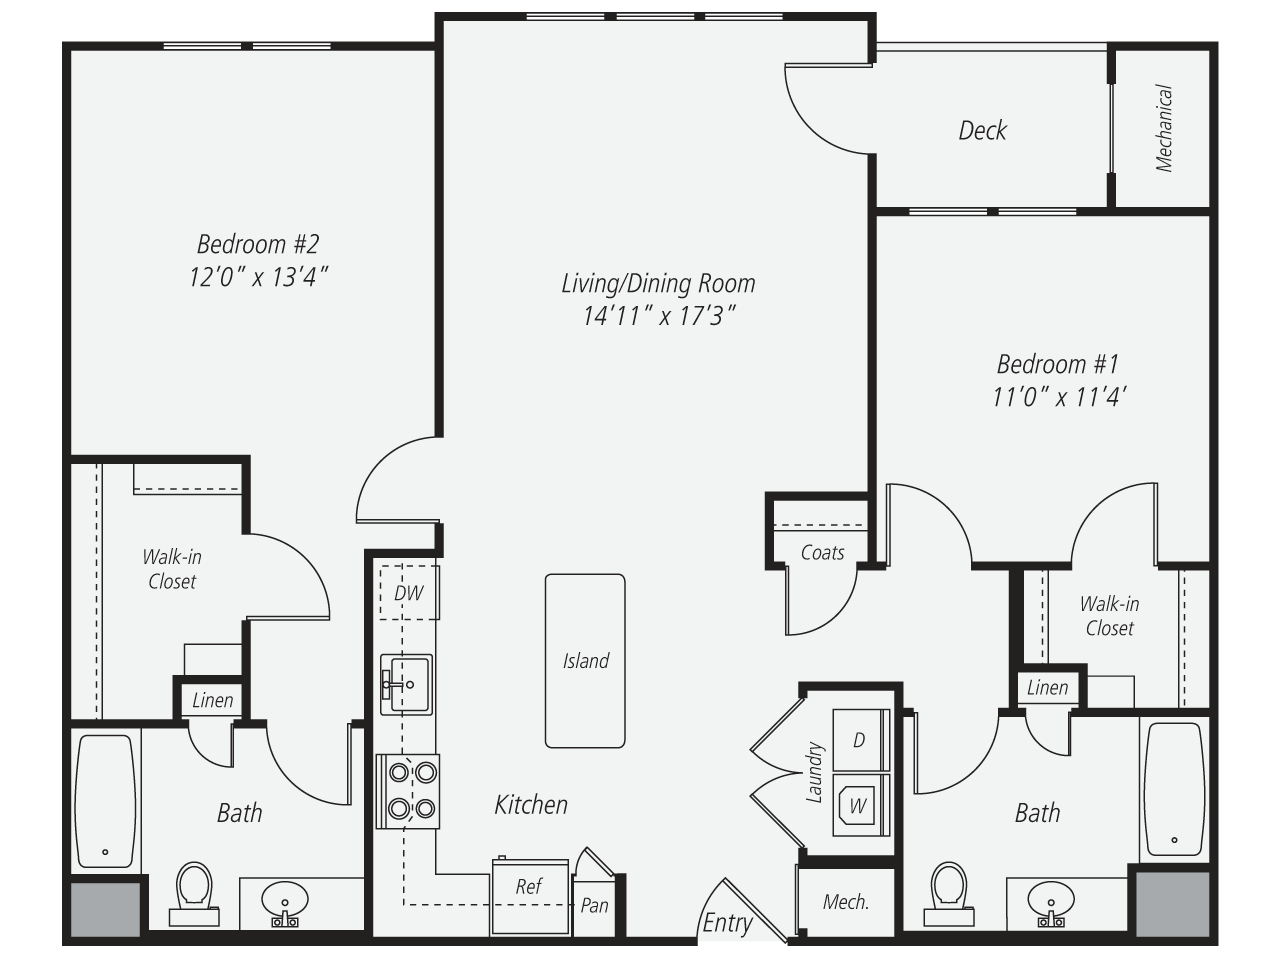 Floorplan for Apartment #204, 2 bedroom unit at Halstead Norwalk